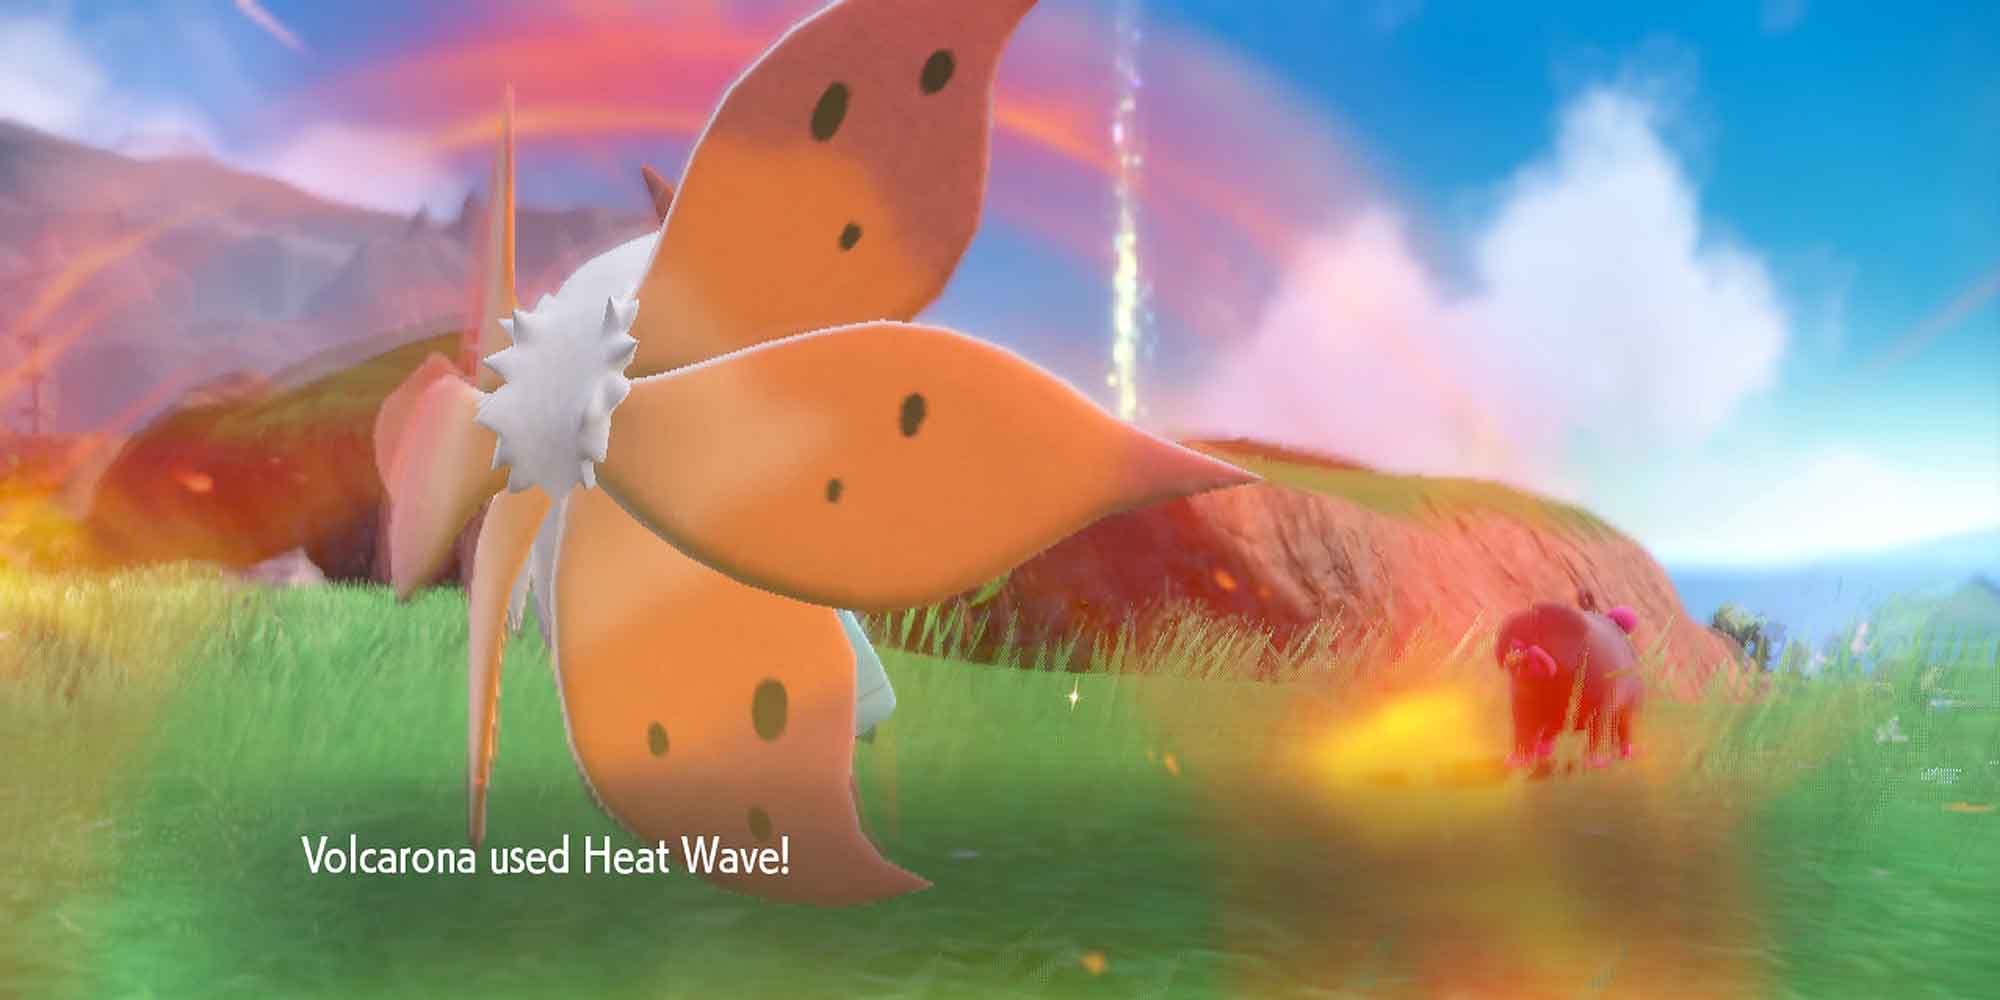 Volcarona using Heat Wave in Pokemon